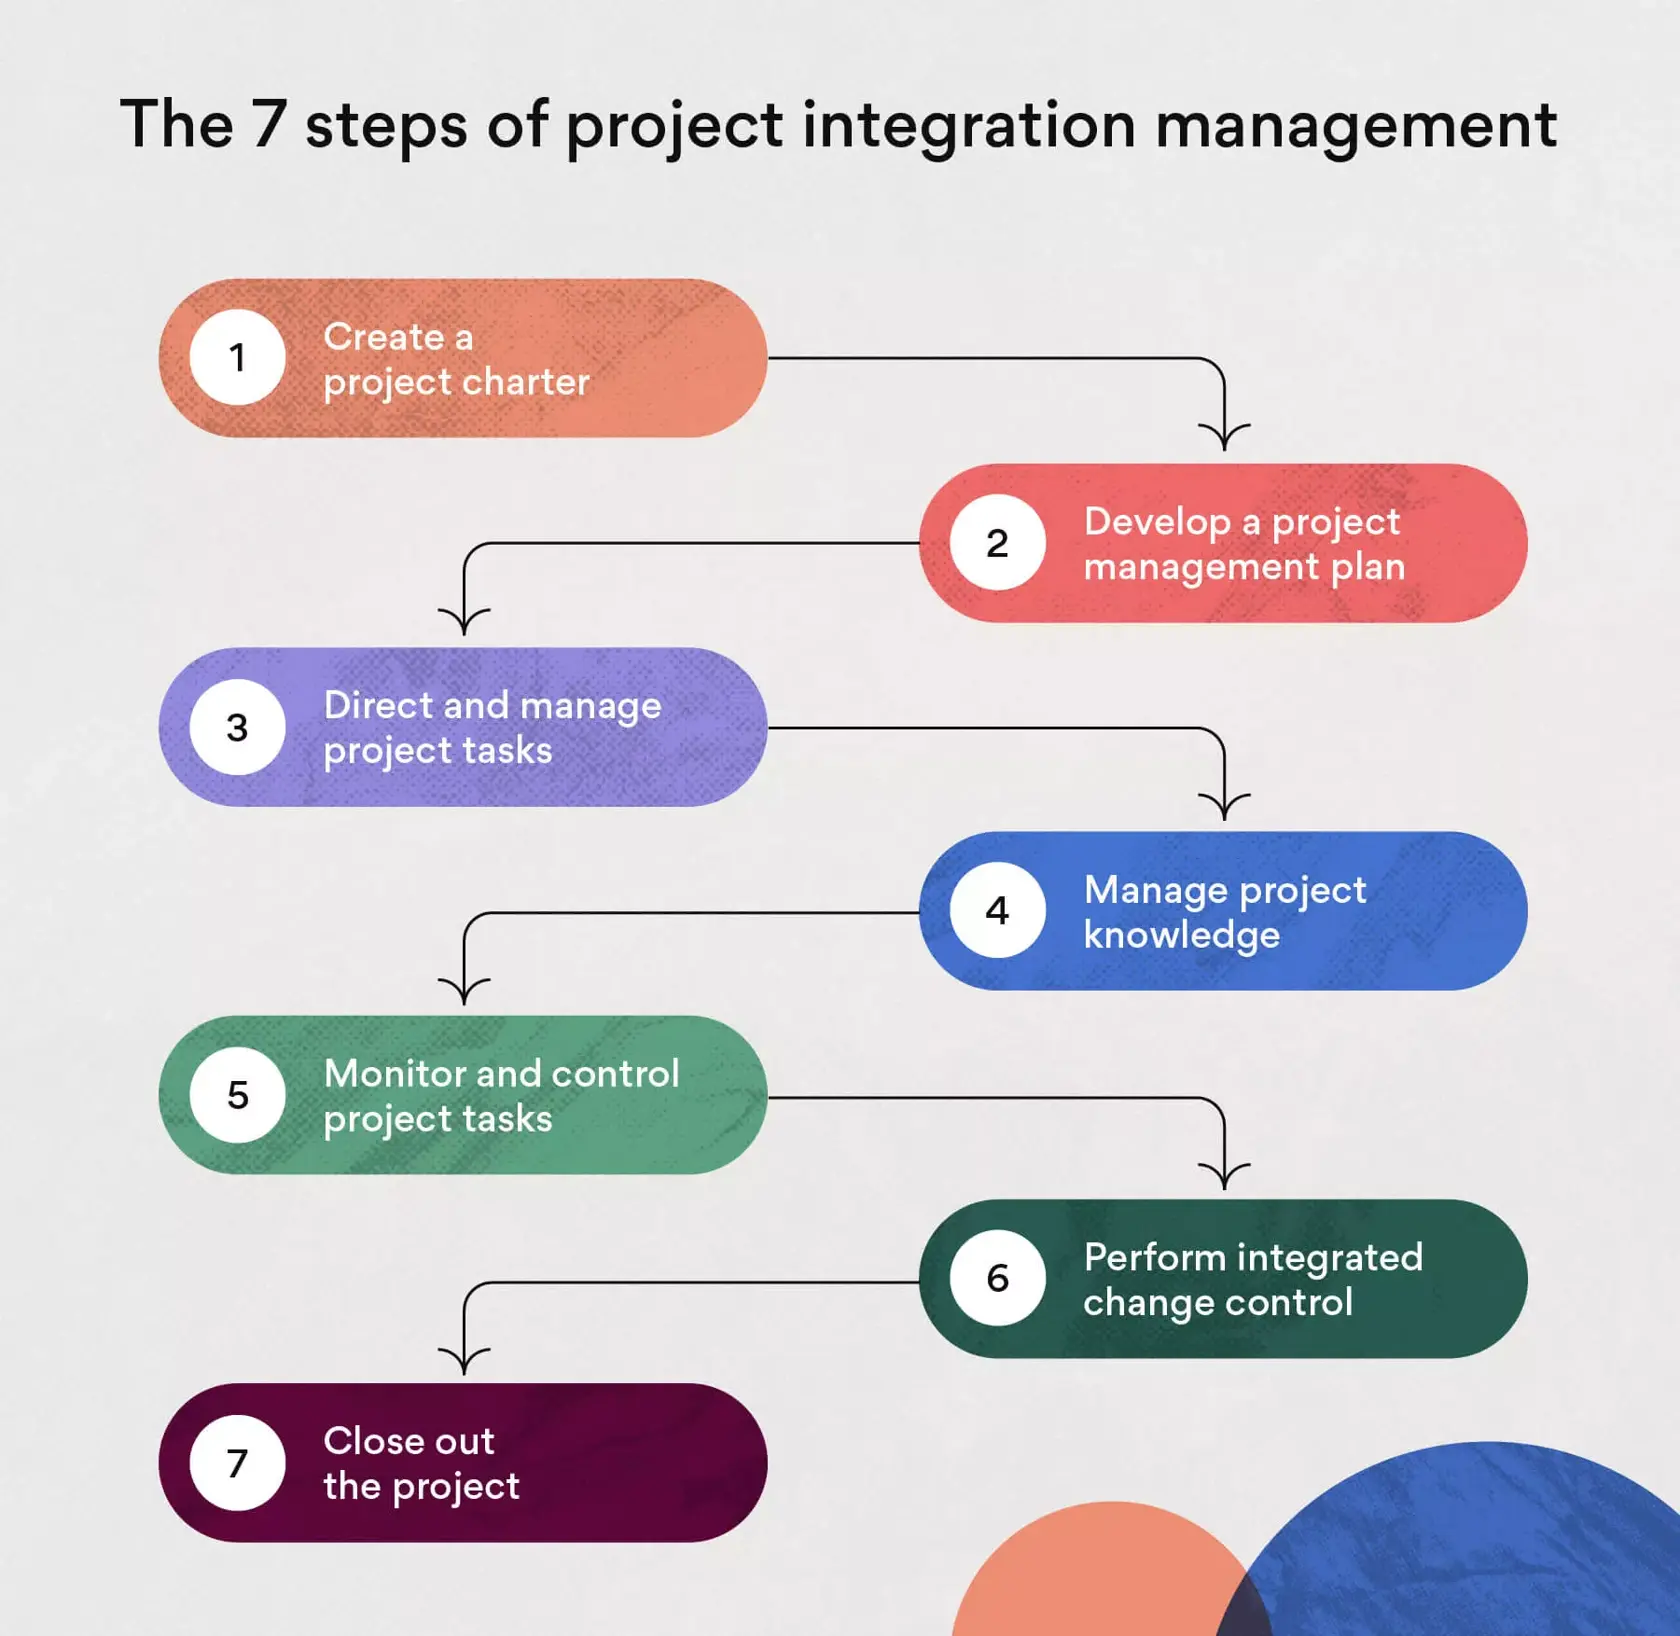 7 langkah manajemen integrasi proyek